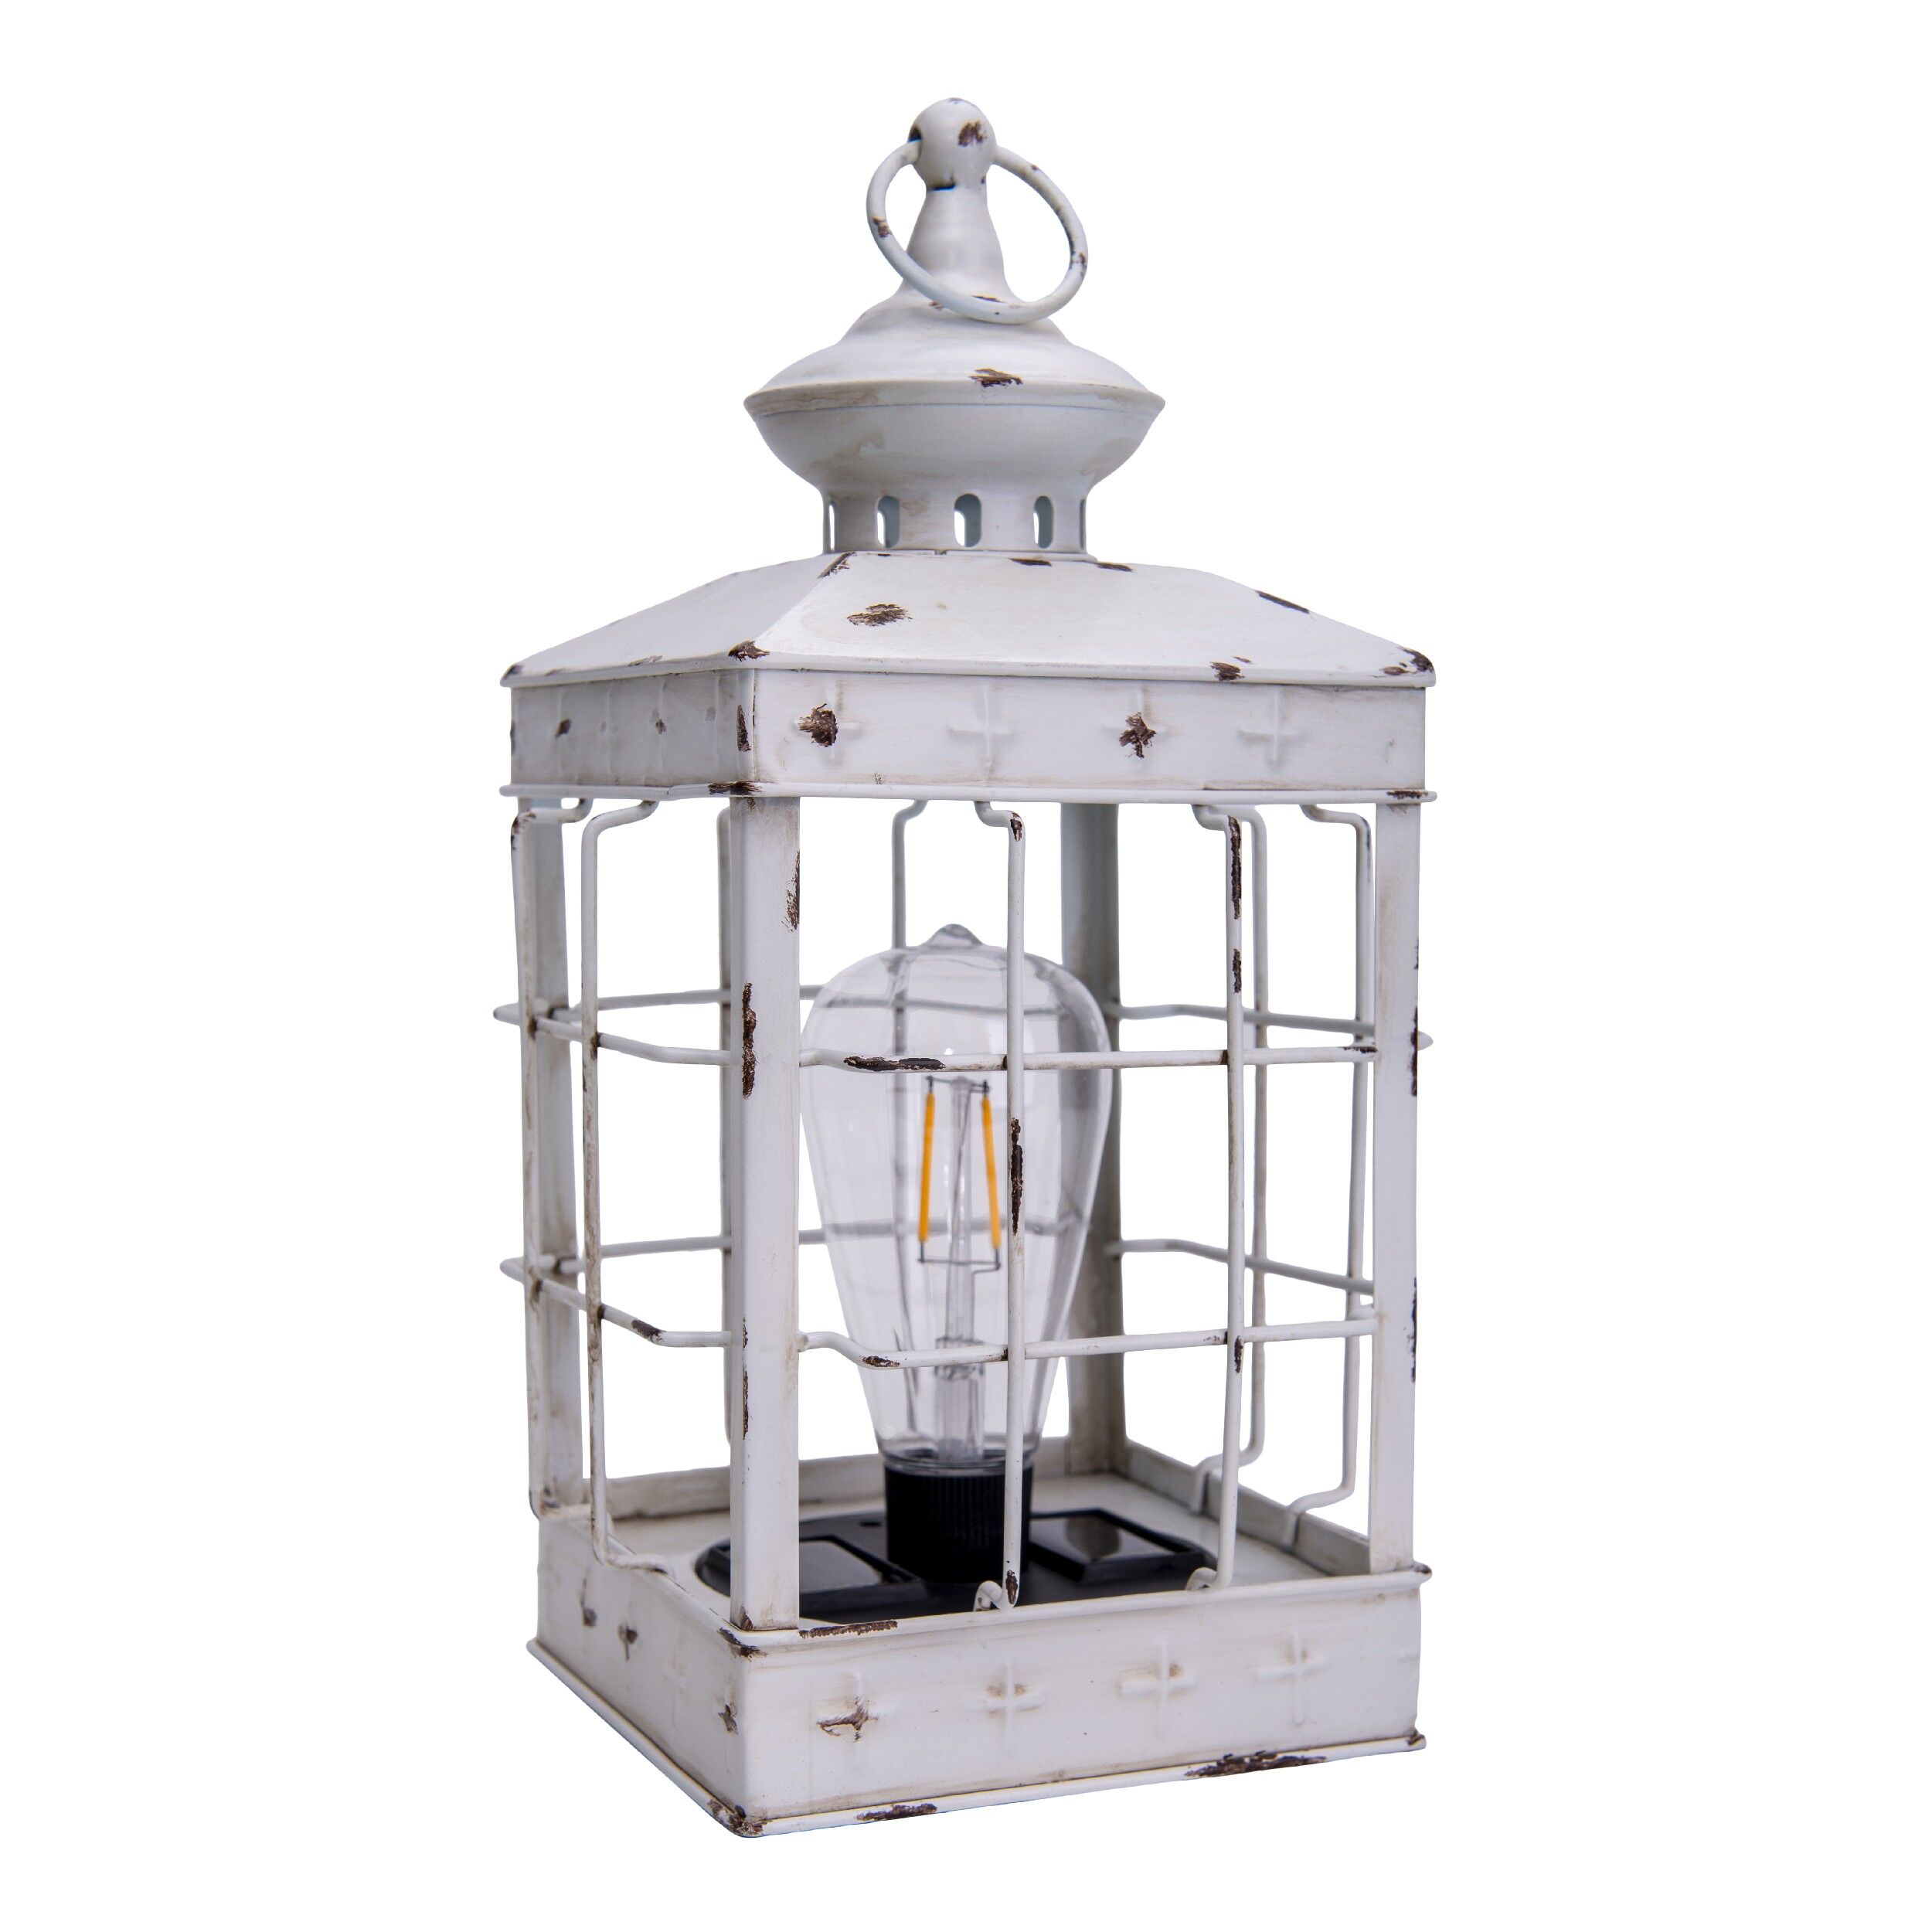 Buy wholesale LED decorative solar light lantern h: 31.5cm antique white